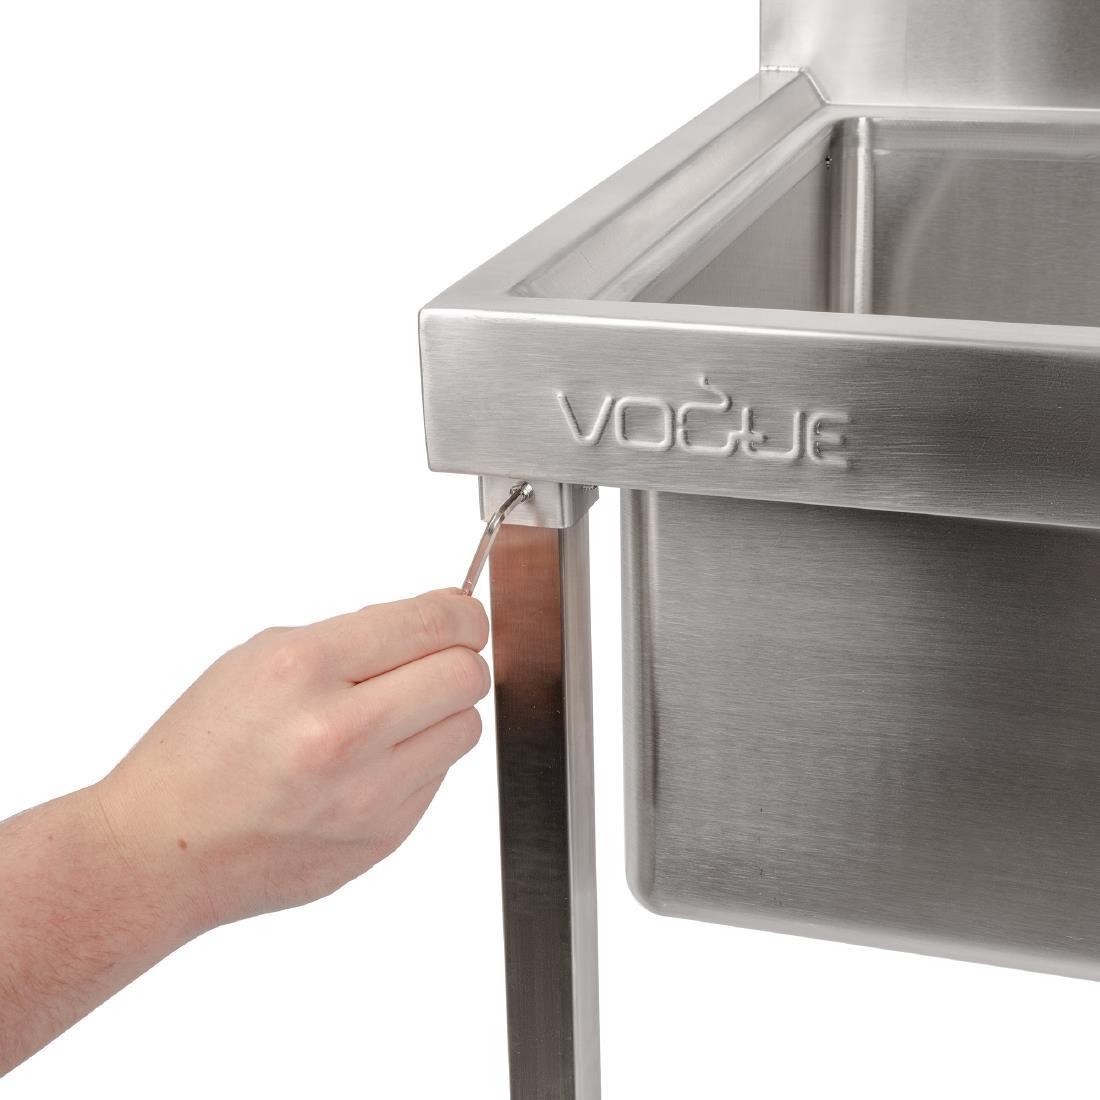 Vogue Stainless Steel Mop Sink - GL281  - 5